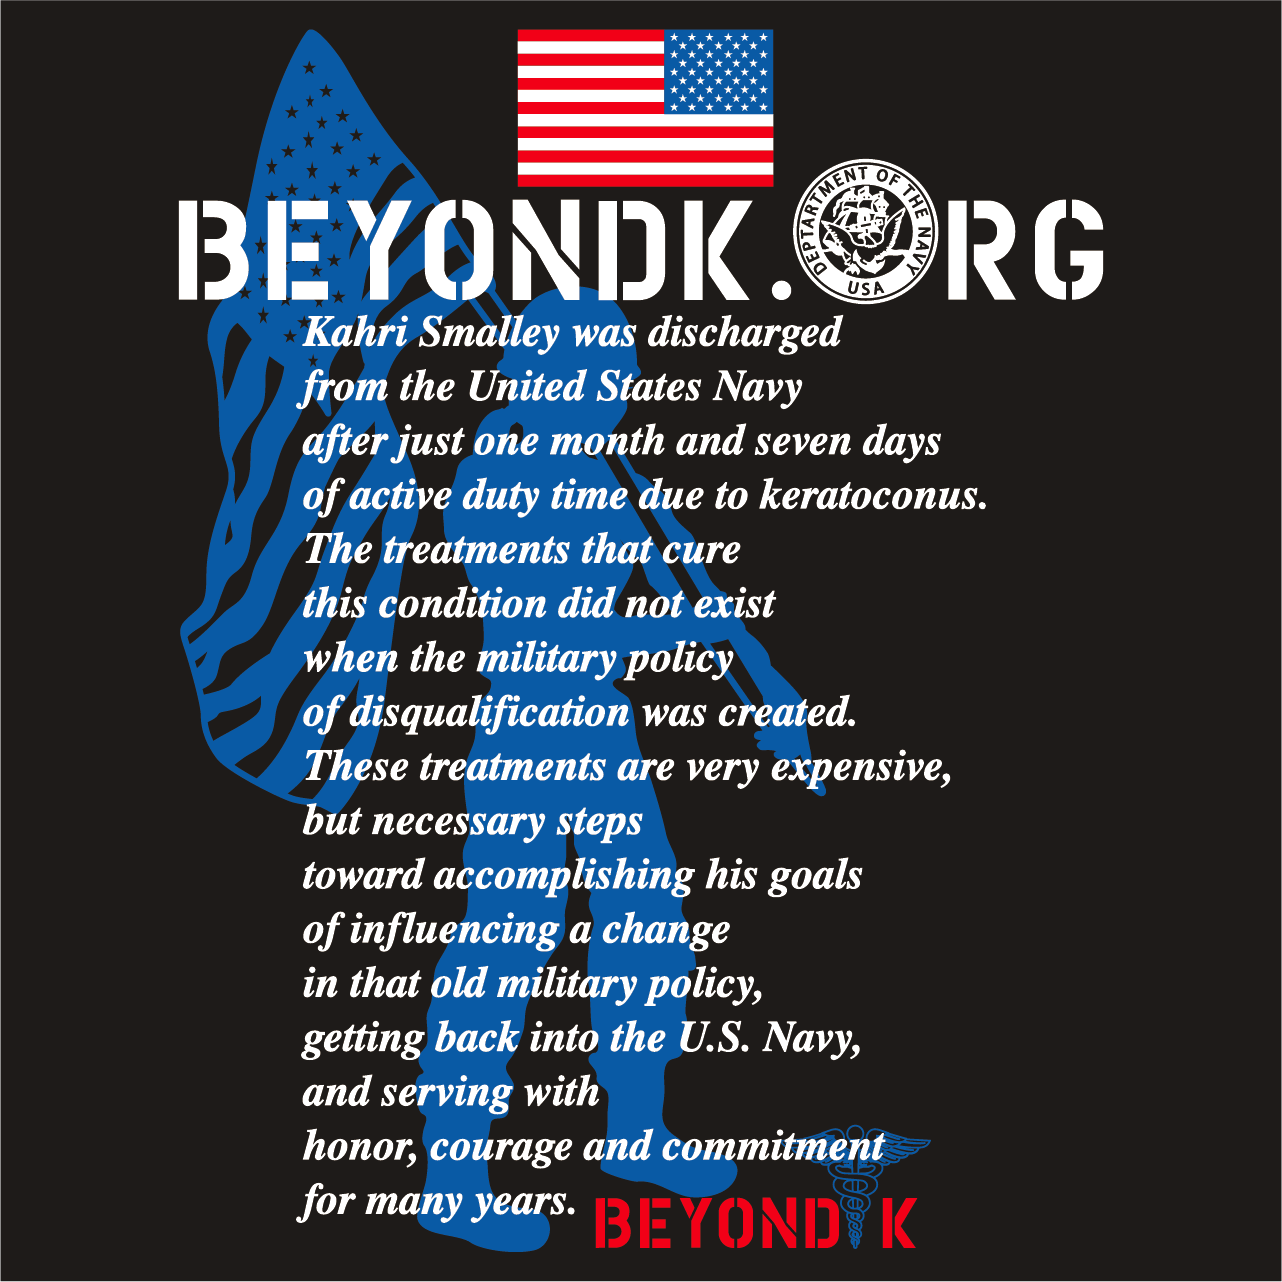 Beyond K Medical Fundraiser shirt design - zoomed